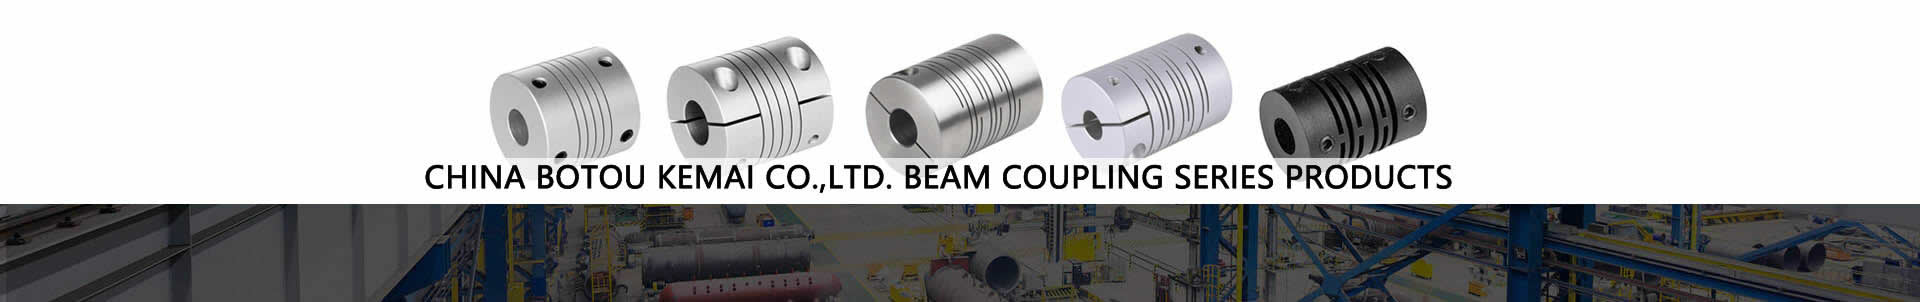 Beam Coupling Manufacturers